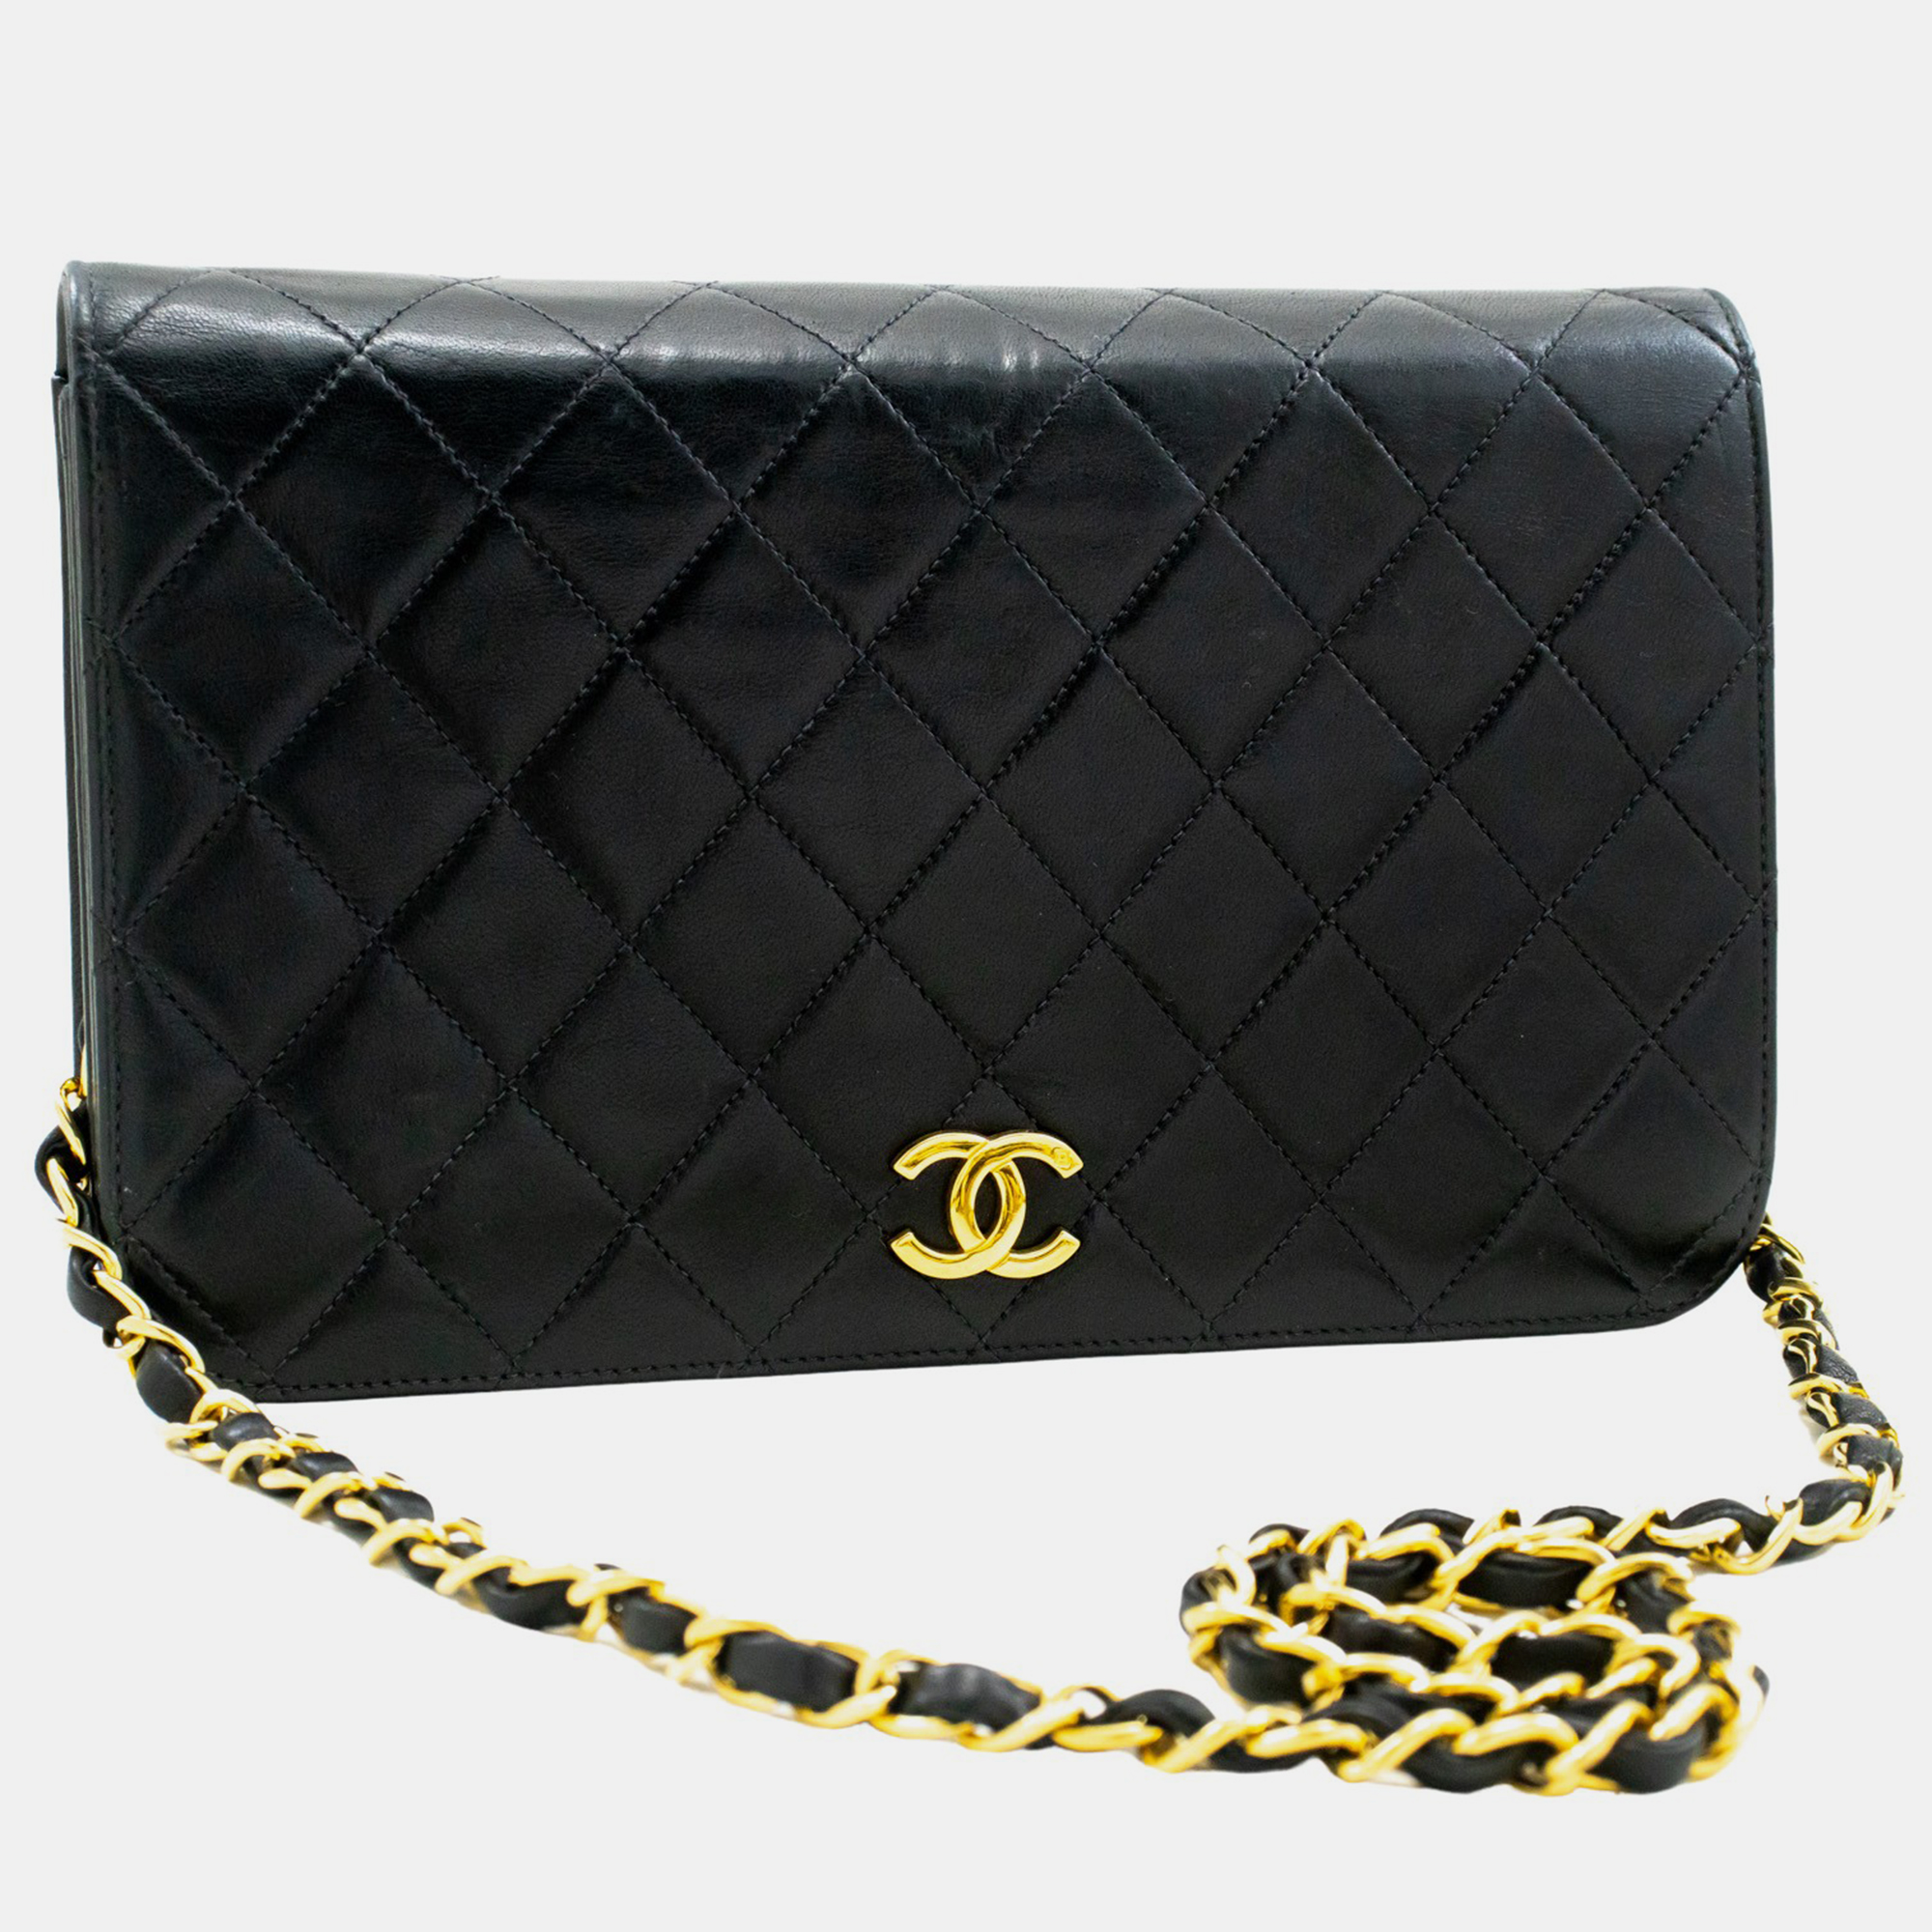 Chanel black leather flap bag